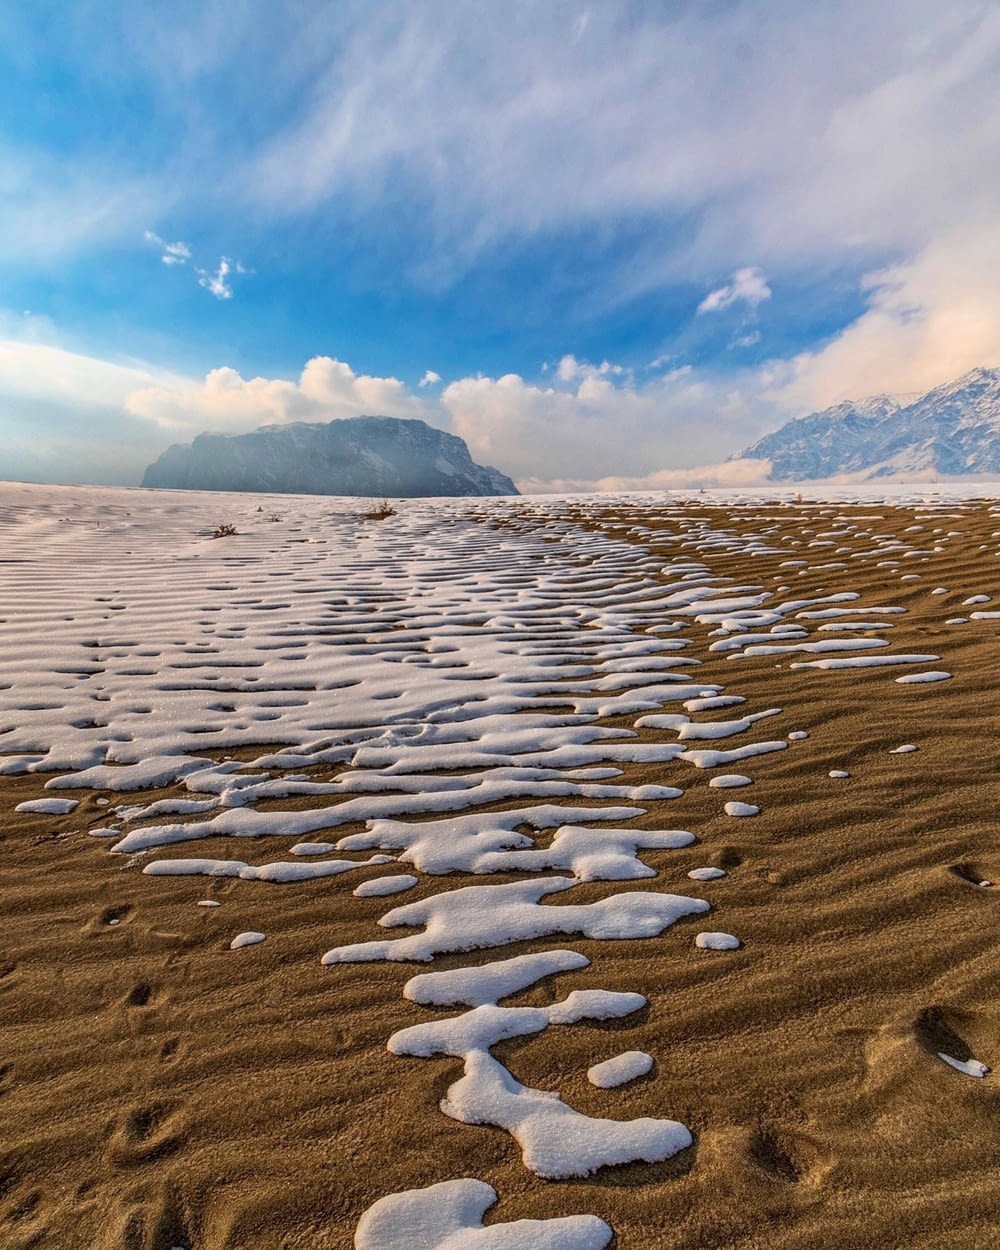 a sandy beach covered in snow under a blue sky